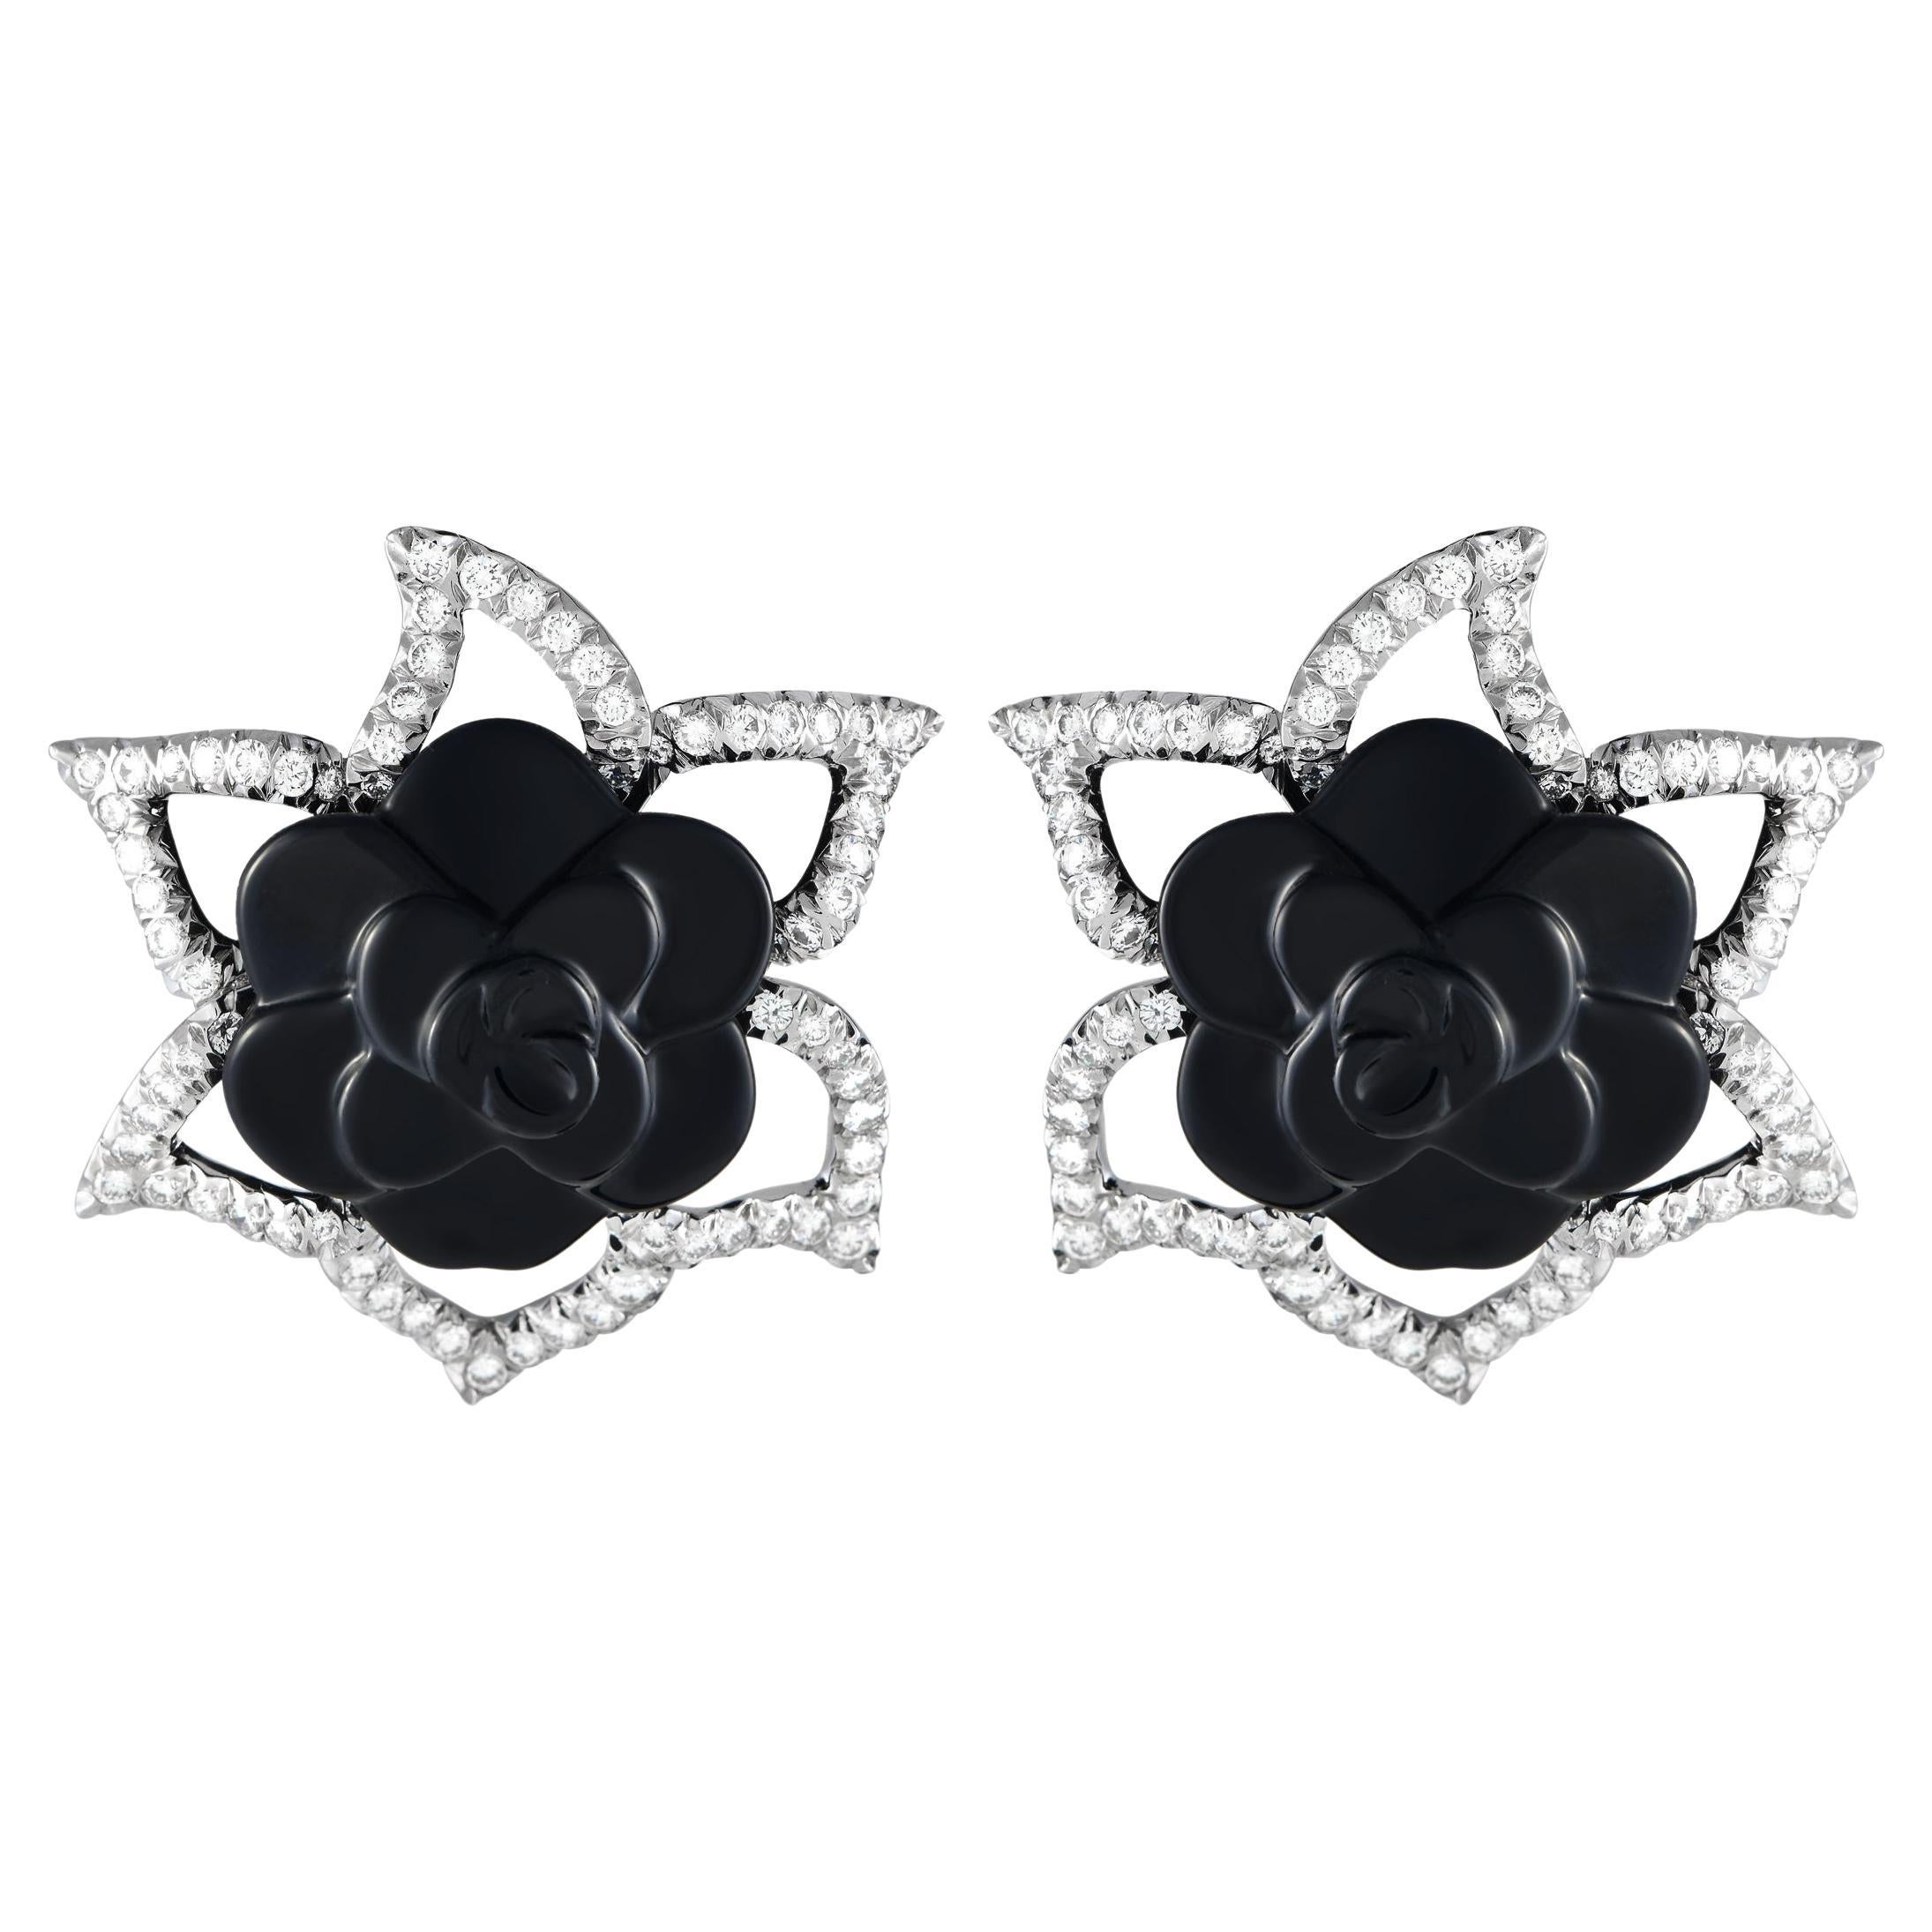 Chanel Camellia 18K White Gold 3.65ct Diamond and Onyx Flower Earrings